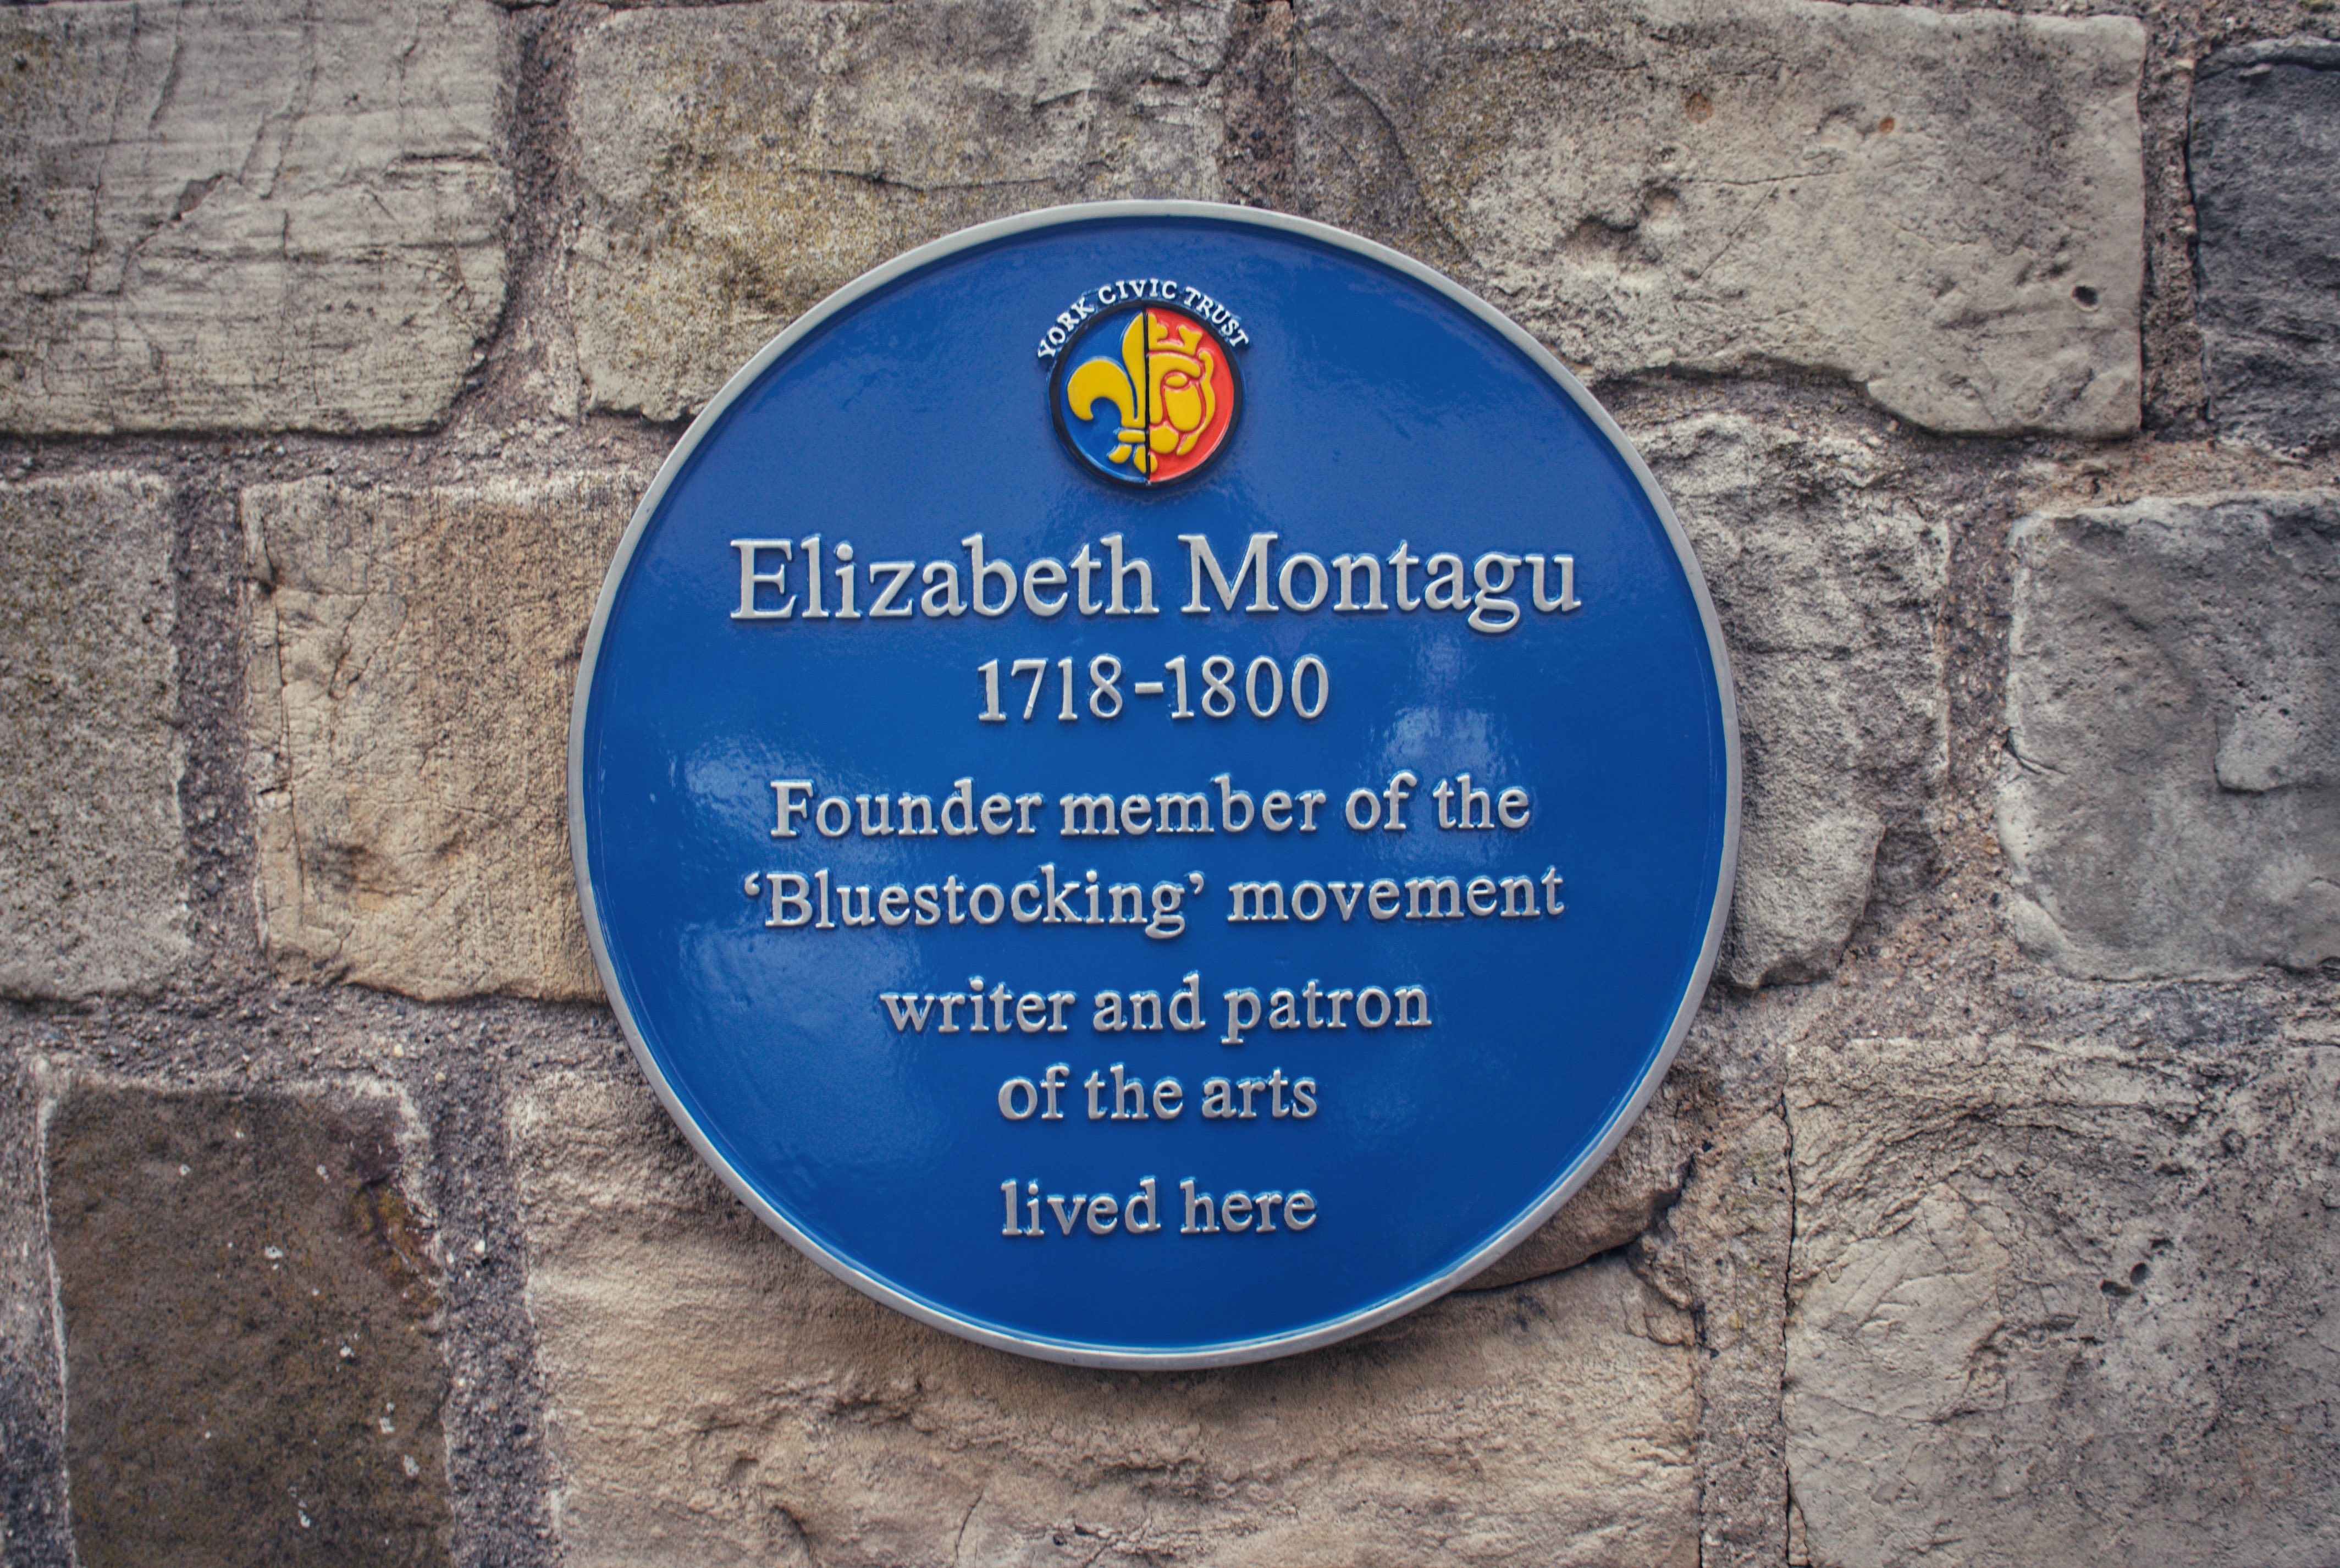 Queen of the Blues: Elizabeth Montagu's Bluestockings